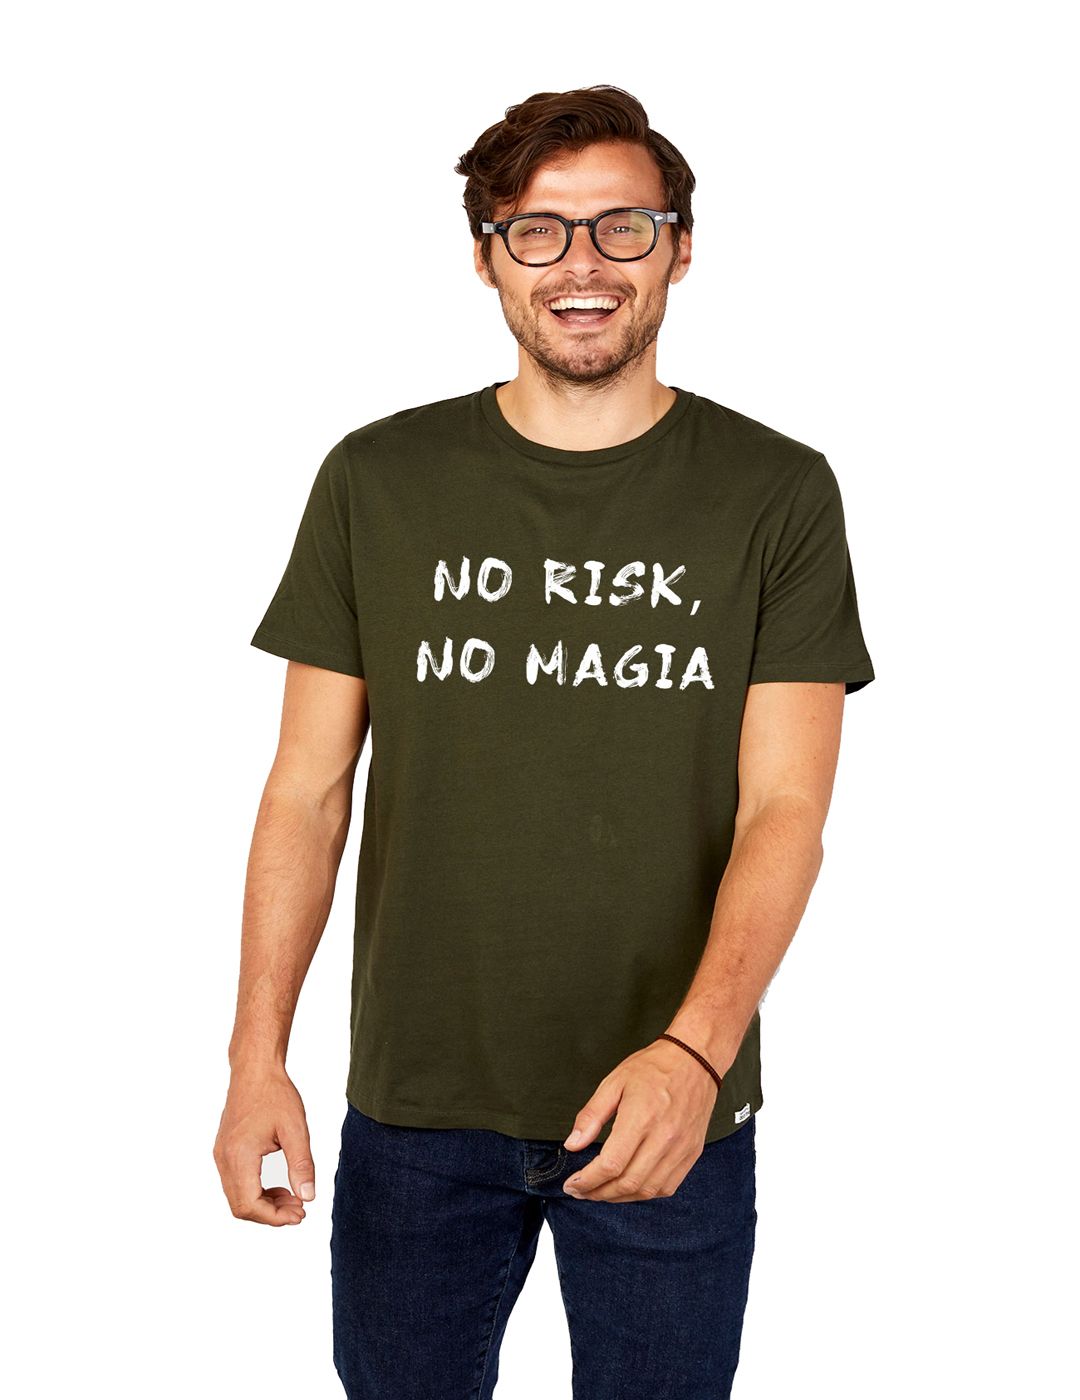 Camiseta Dear Tee Hombre No Risk No Magia